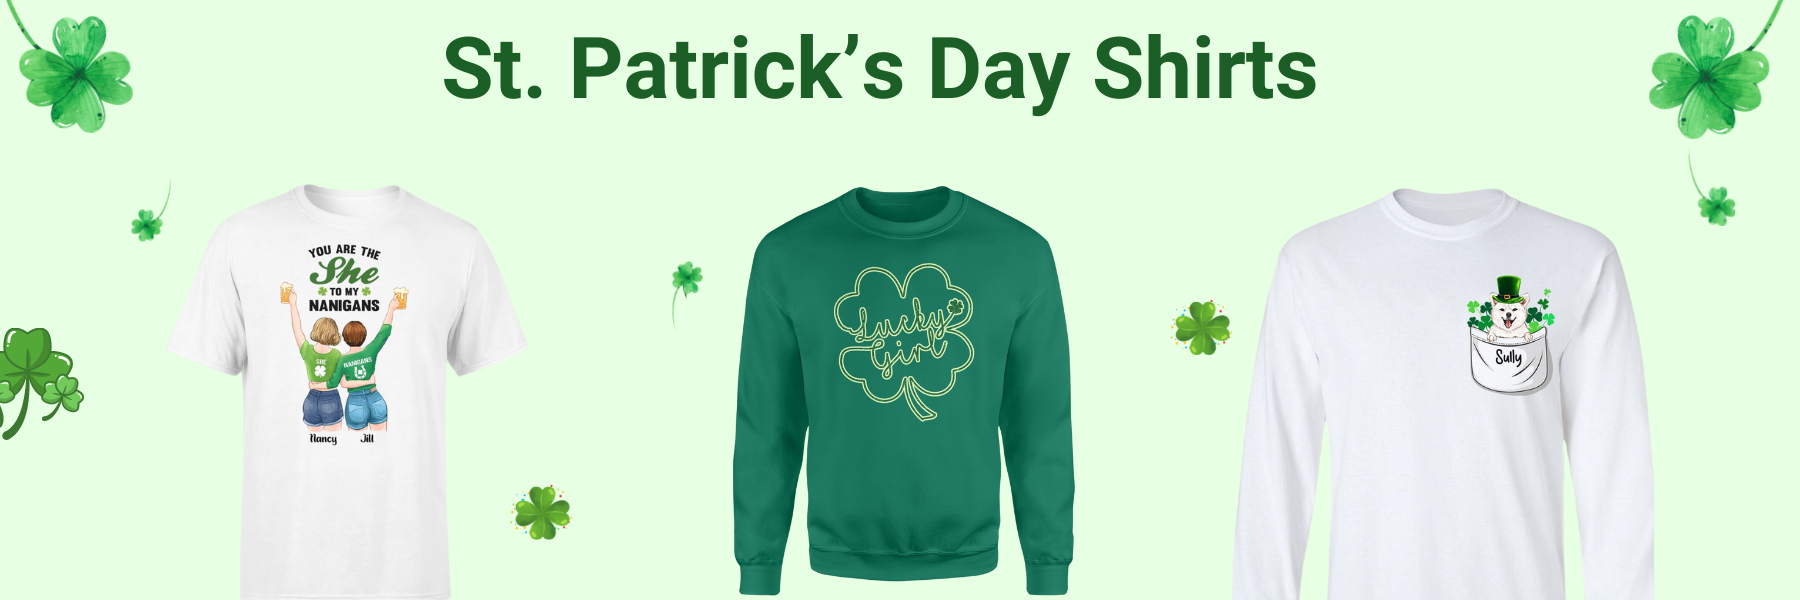 st Patrick's Day shirts